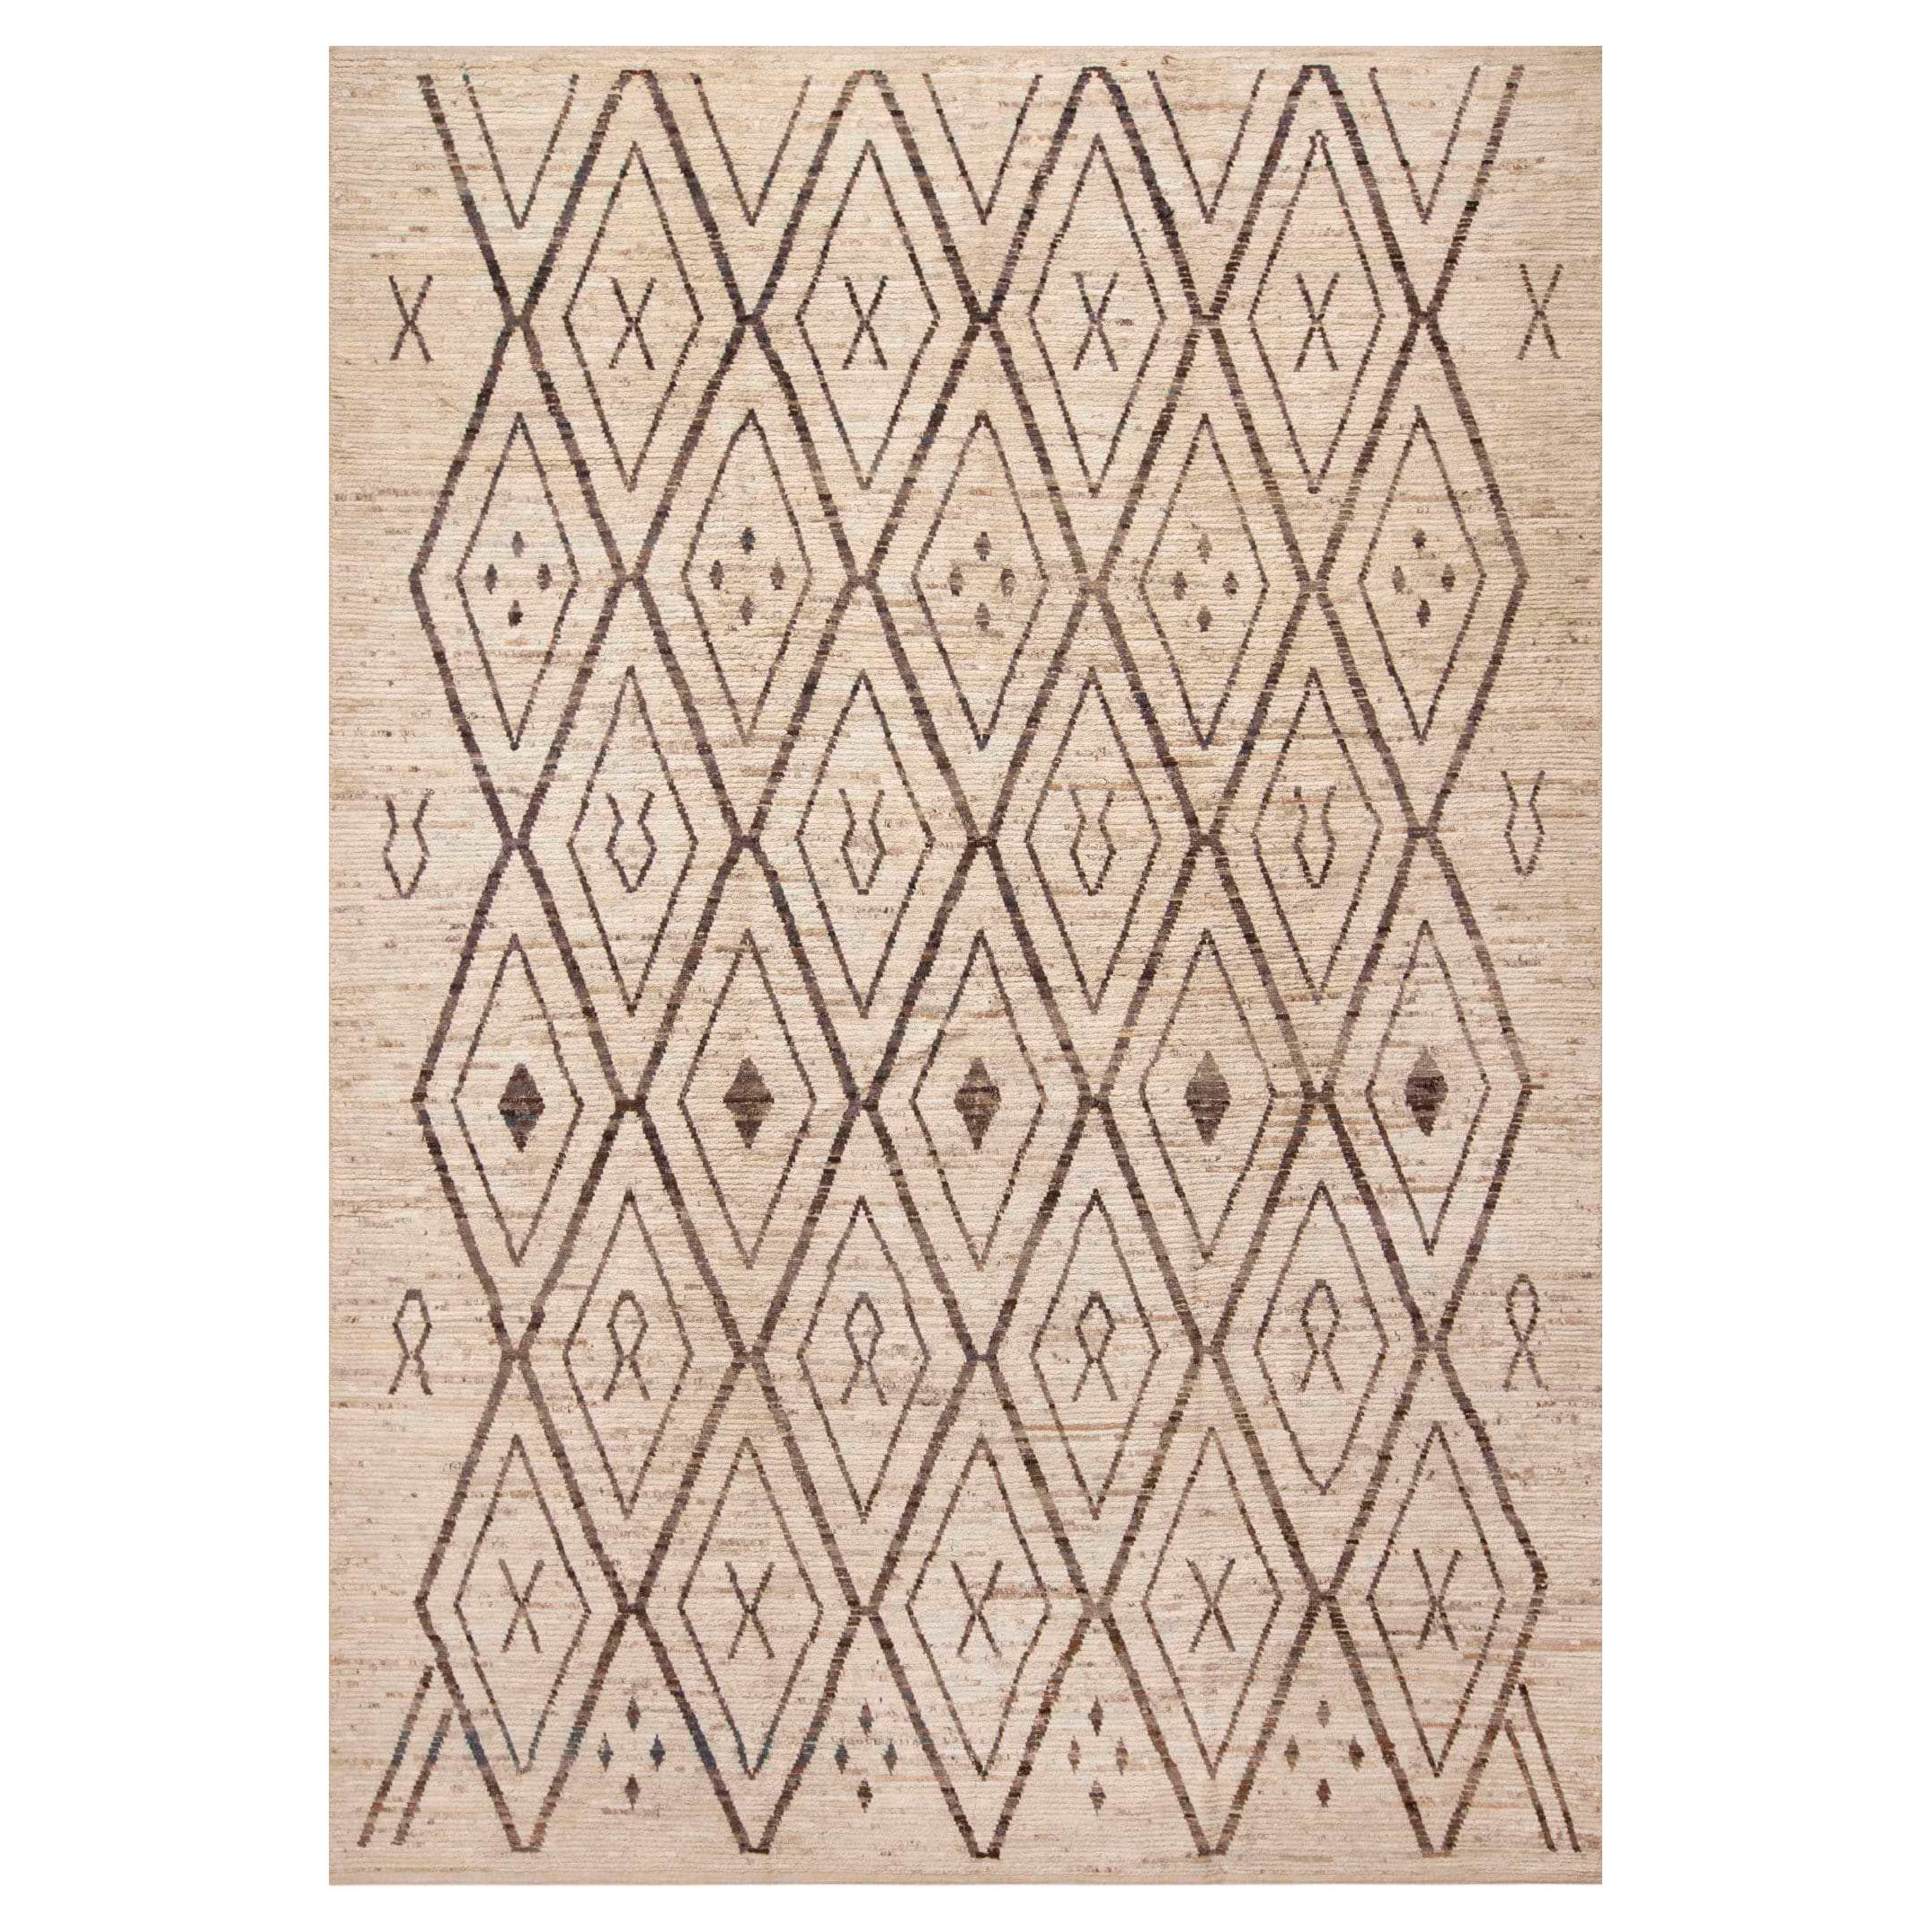 Nazmiyal Collection Tribal Geometric Berber Beni Ourain Design Rug 10' x 14'2"